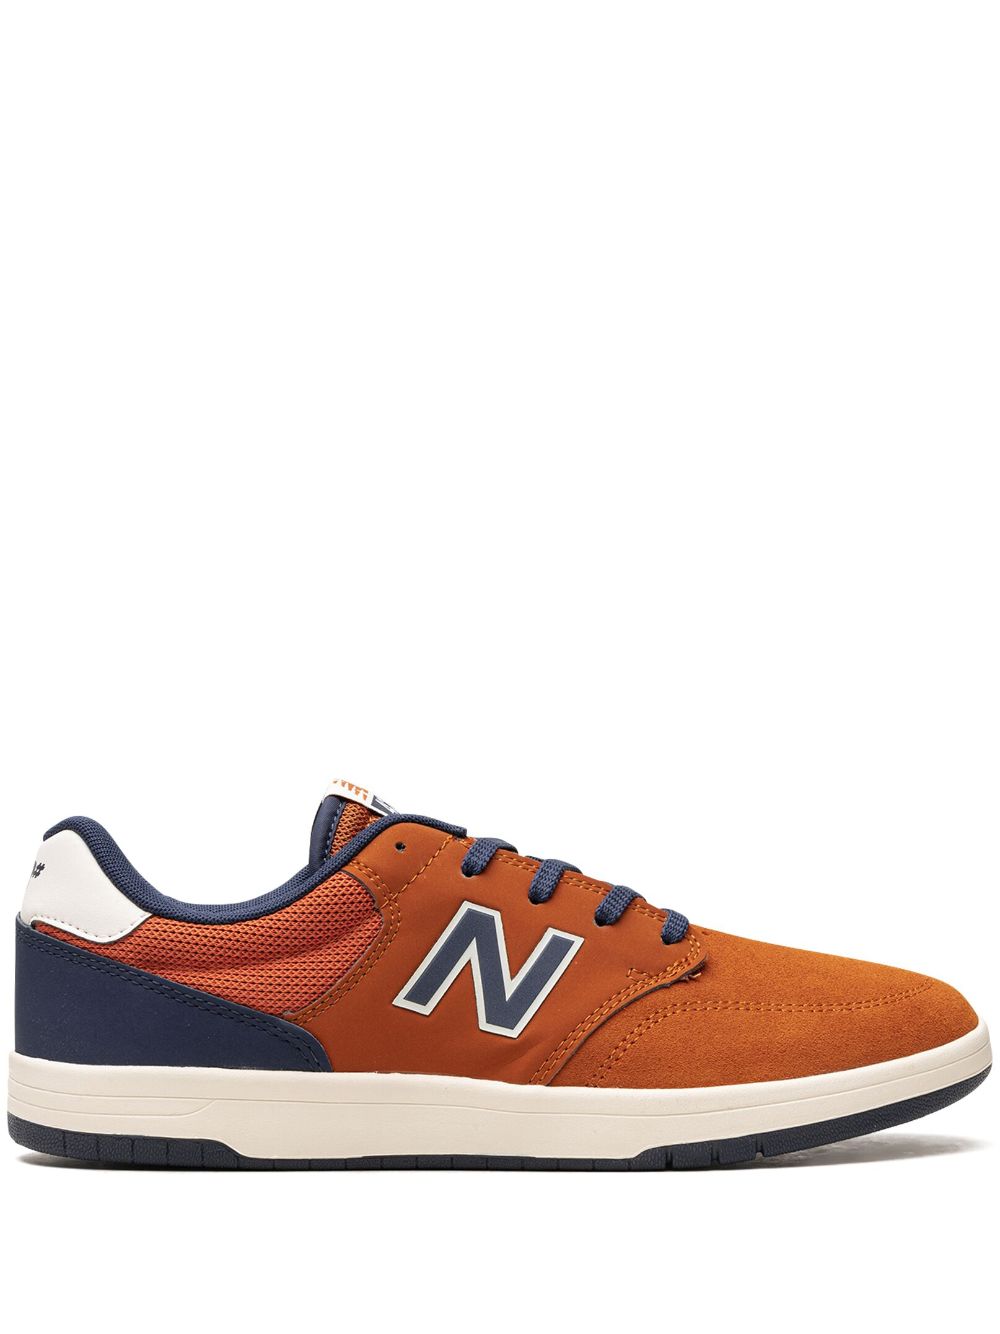 New Balance Numeric 425 "Brown Blue" sneakers - Orange